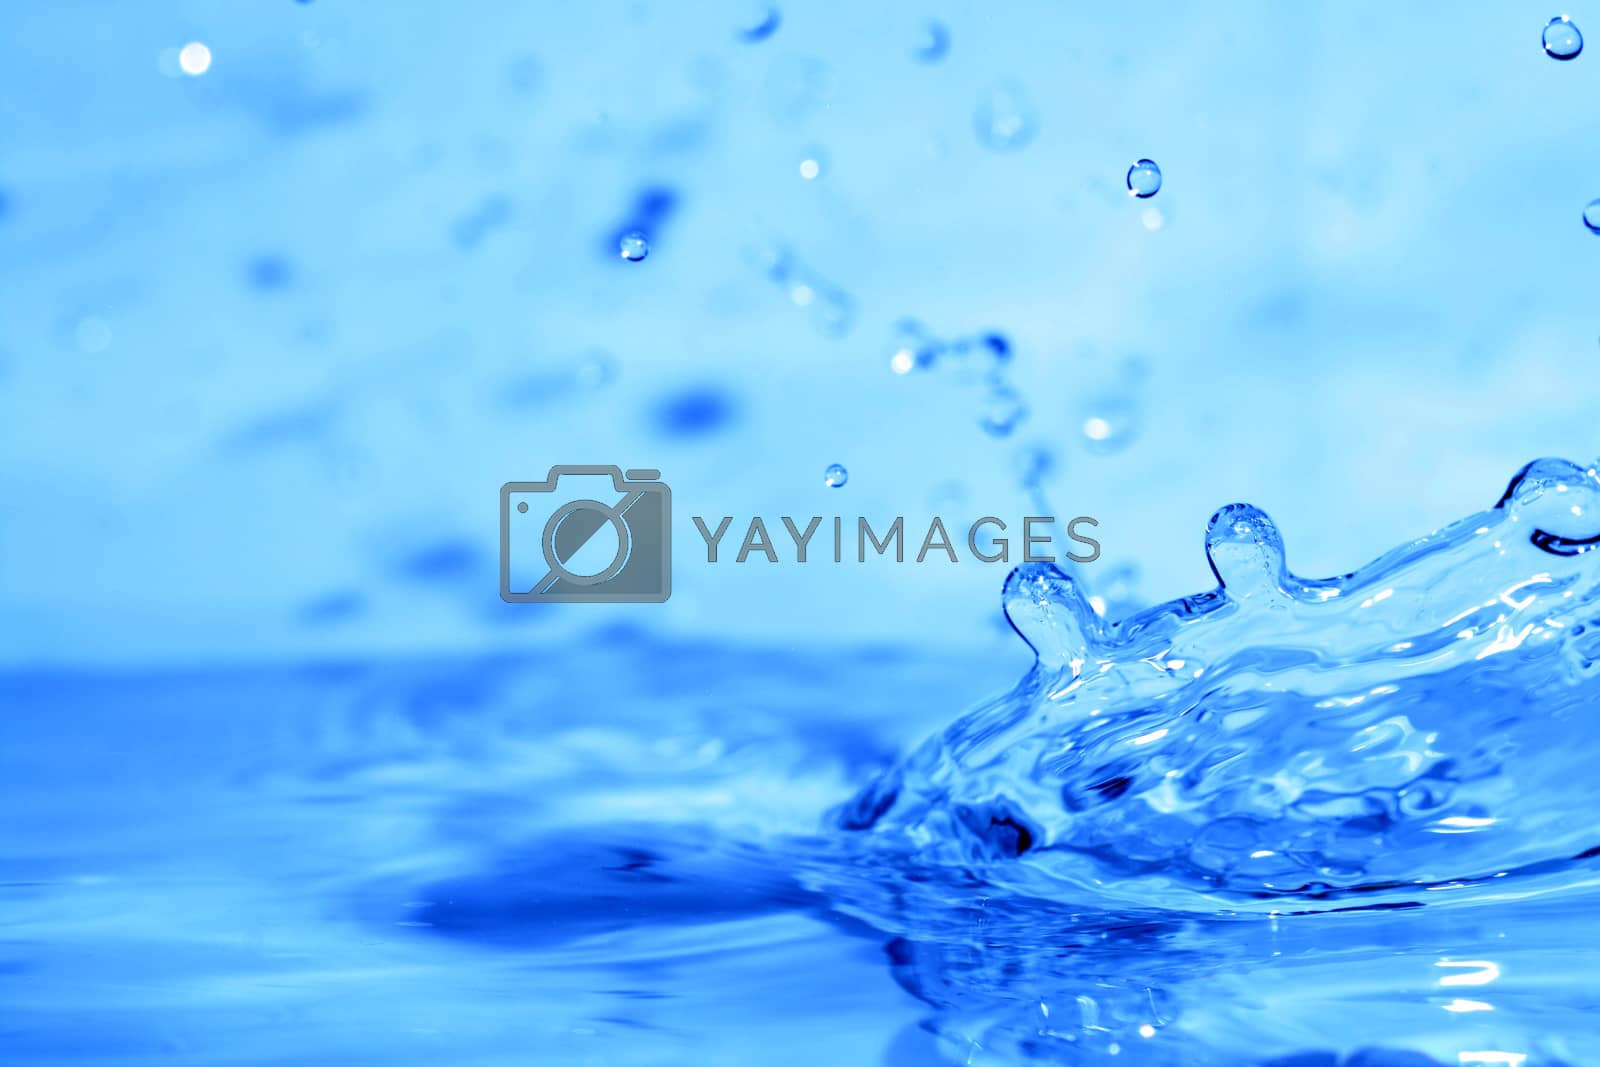 Royalty free image of water splash by Yellowj